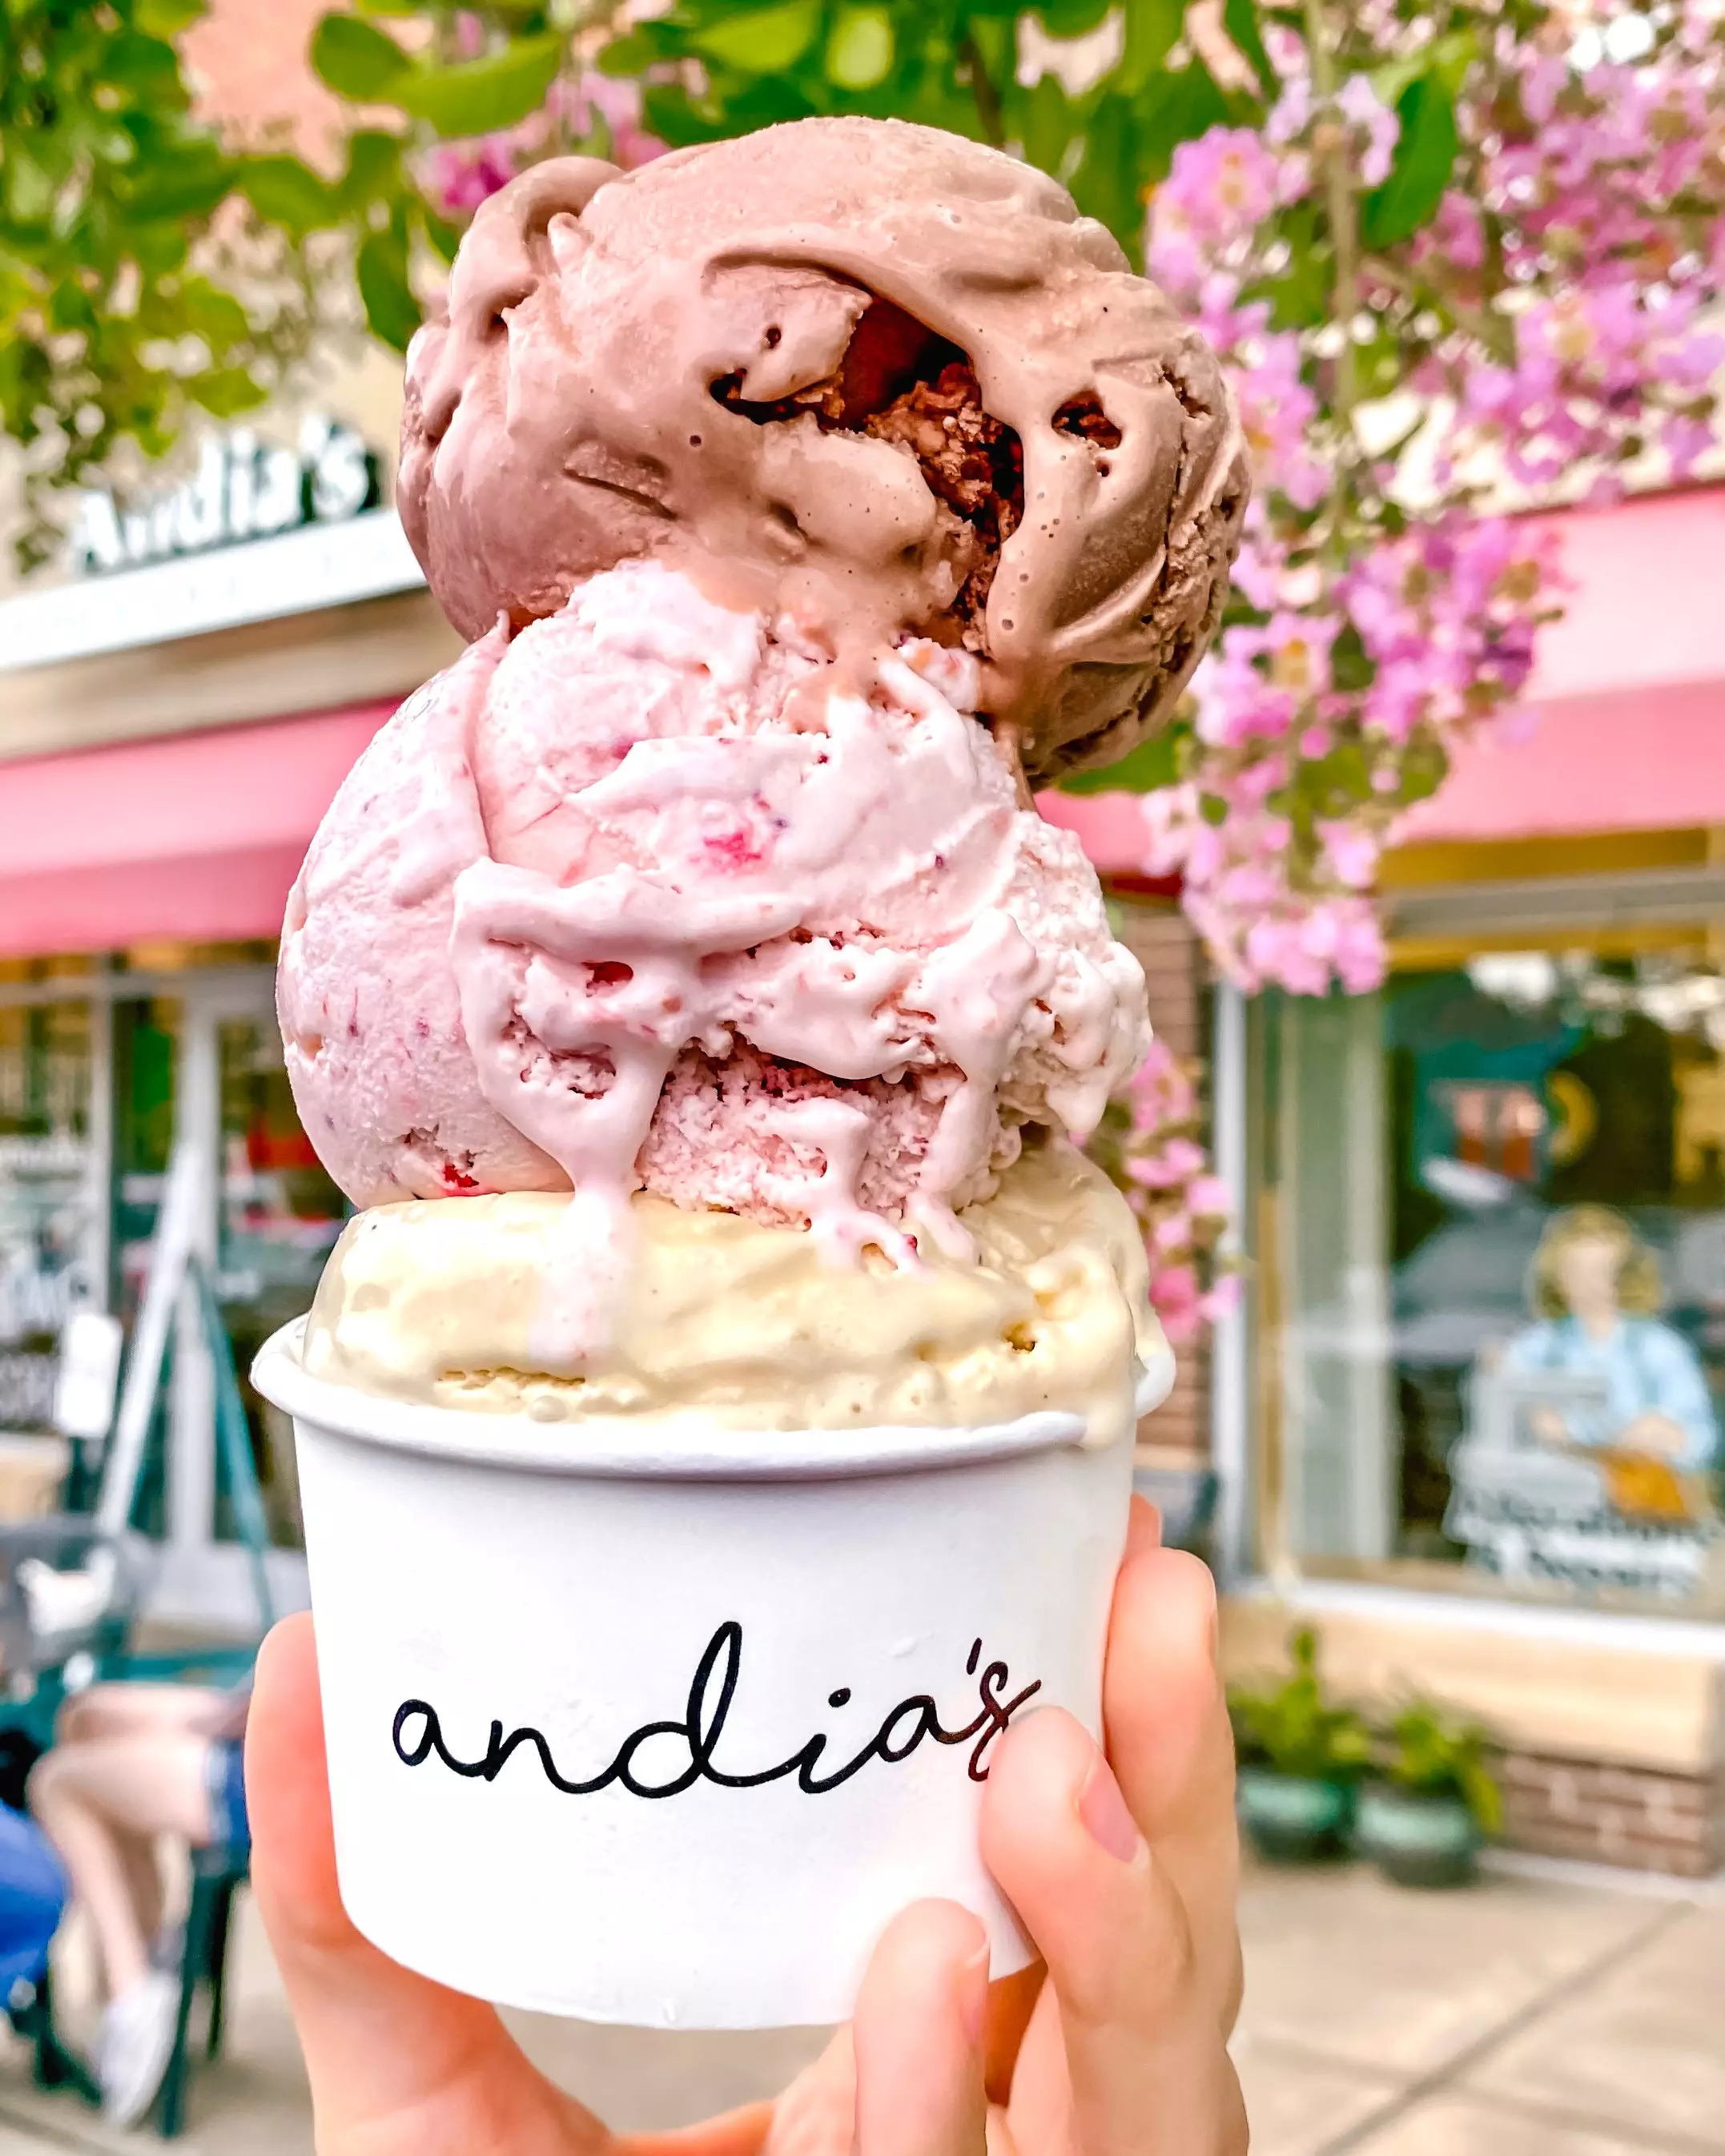 Andias Ice Cream vcs scoop